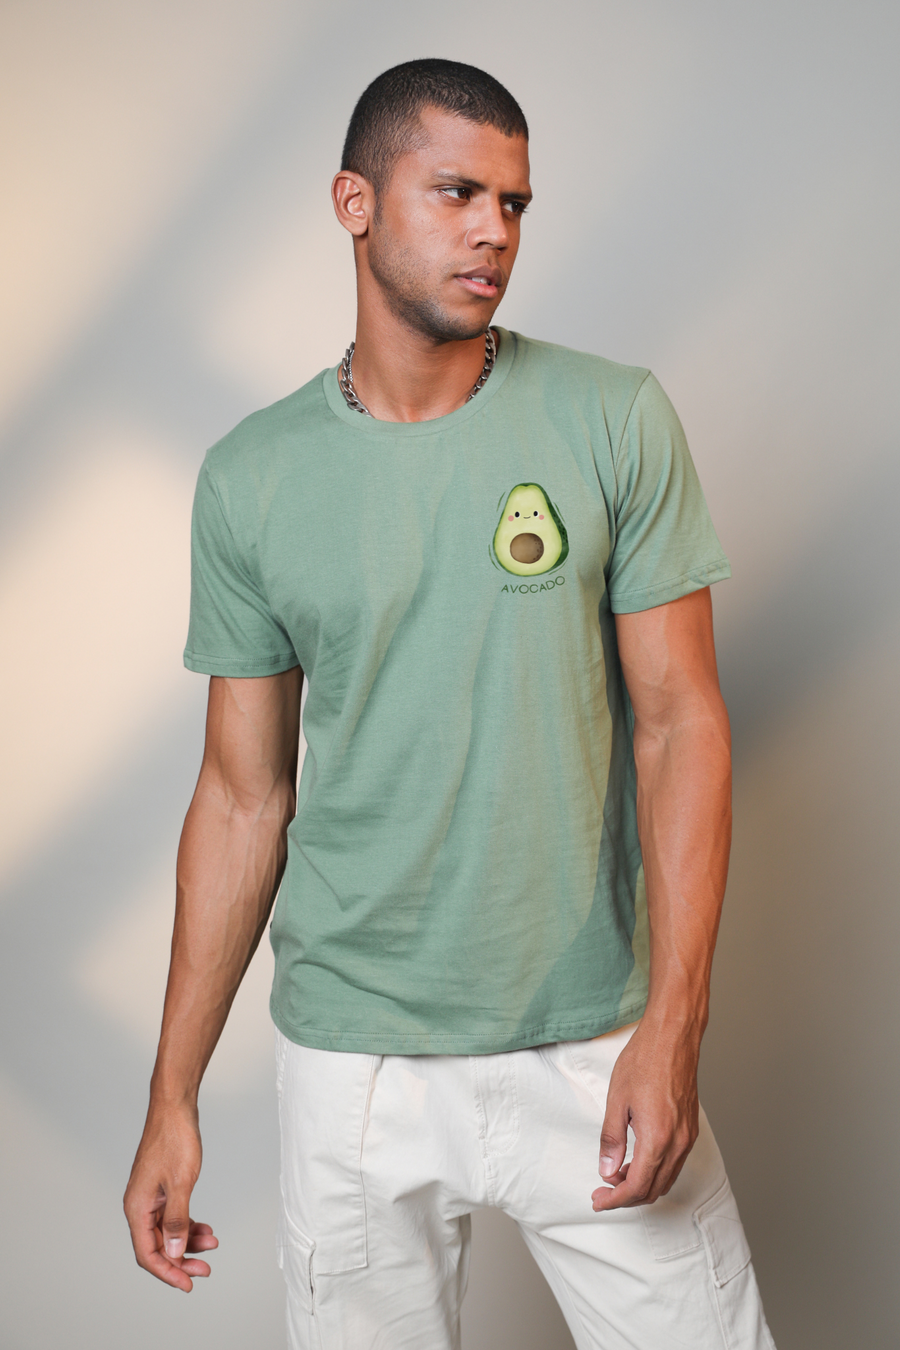 Avocado- Half sleeve t-shirt